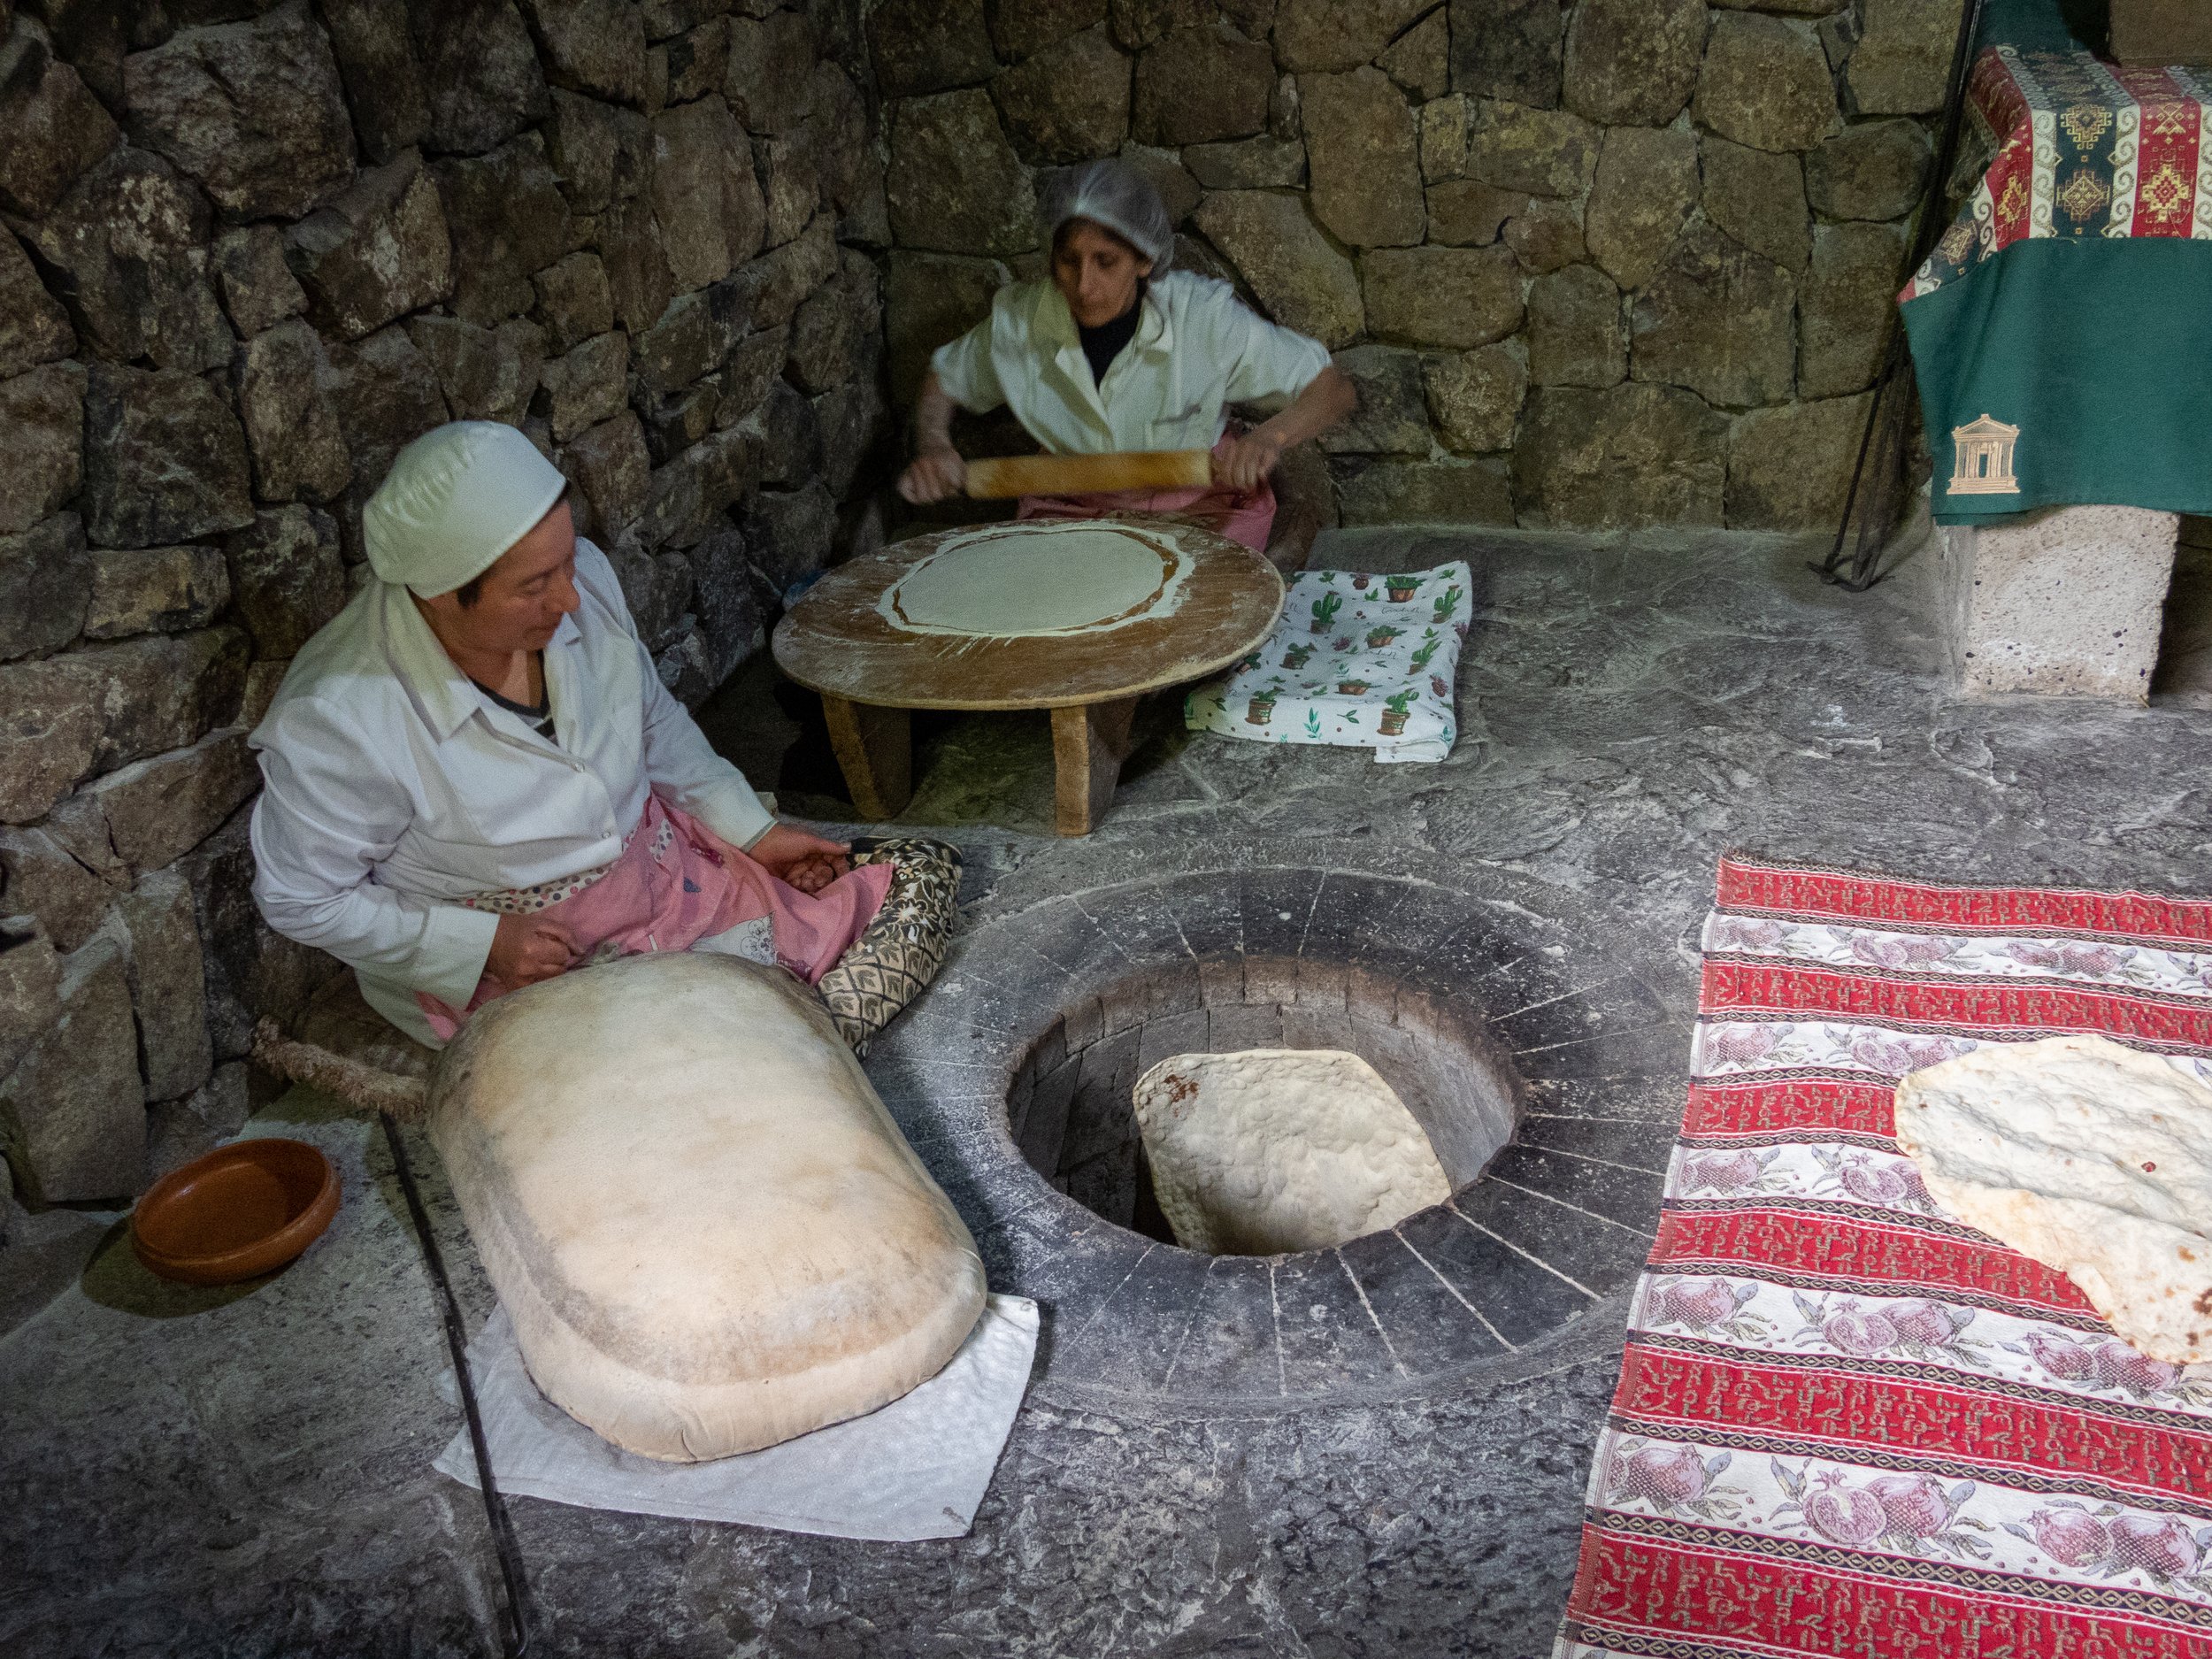 Women baking traditional Armenian flatbread “Lavash” in Tandoori oven, Garni Village, Armenia